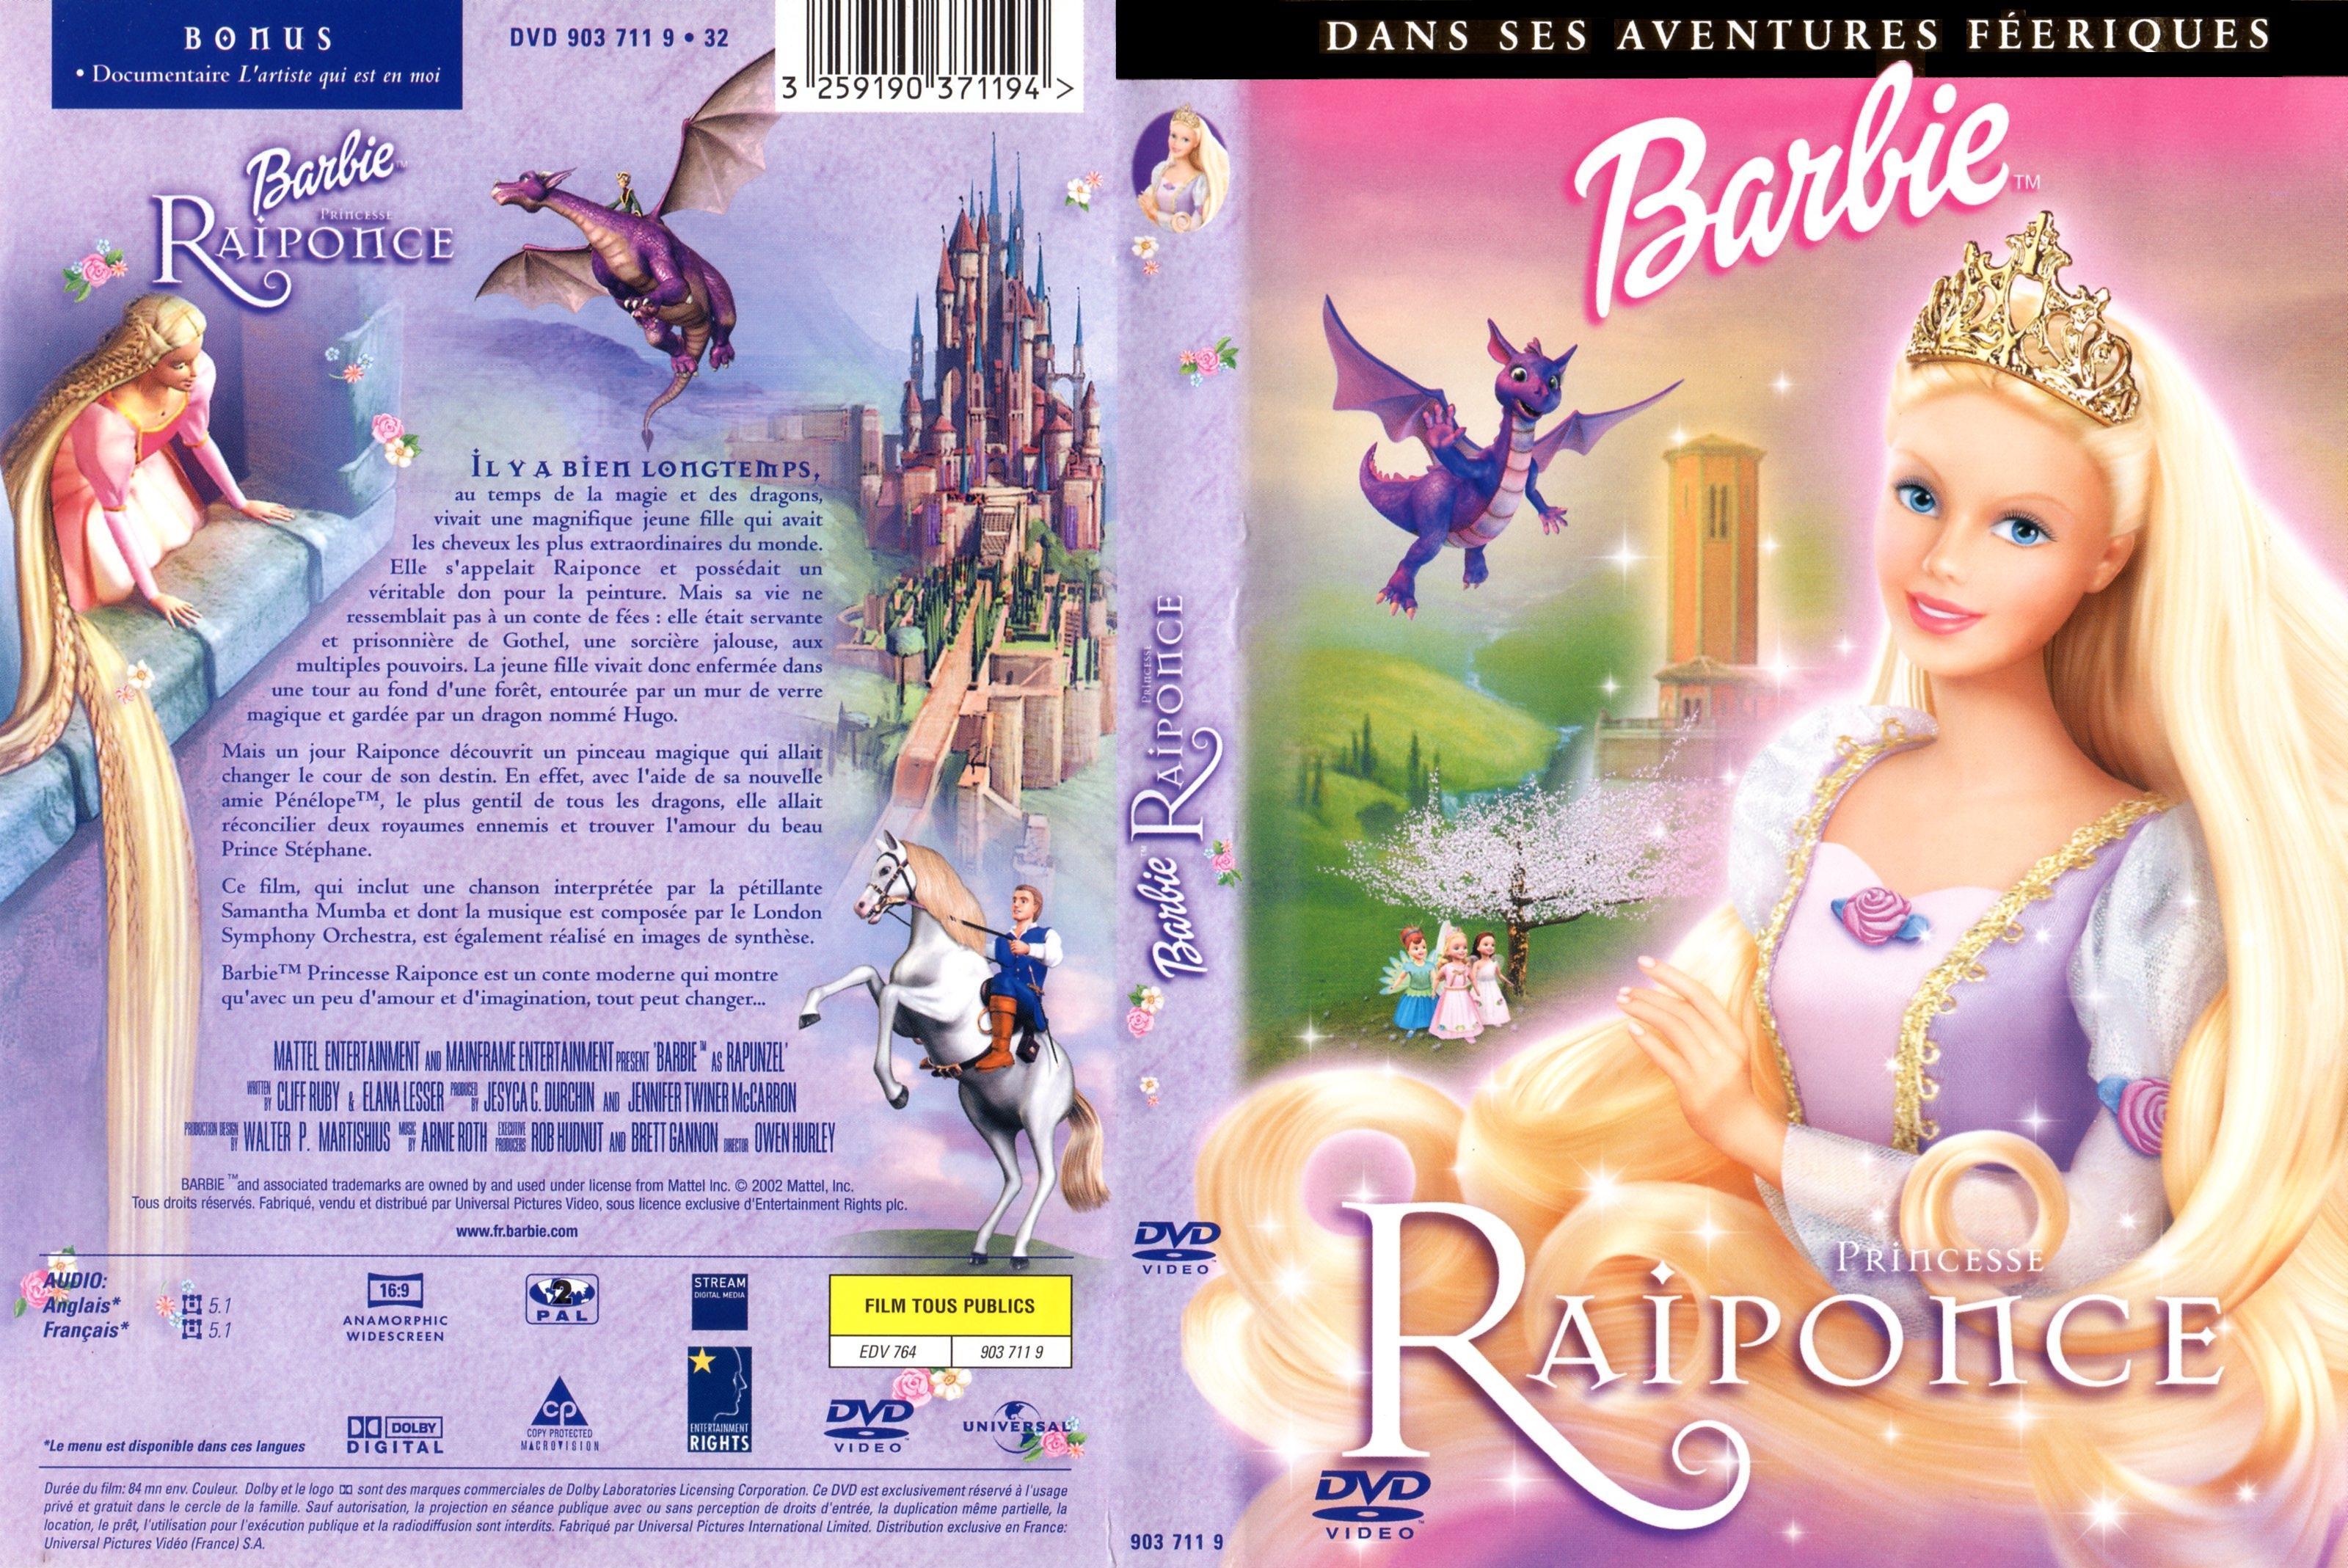 Jaquette DVD Barbie princesse Raiponce v2